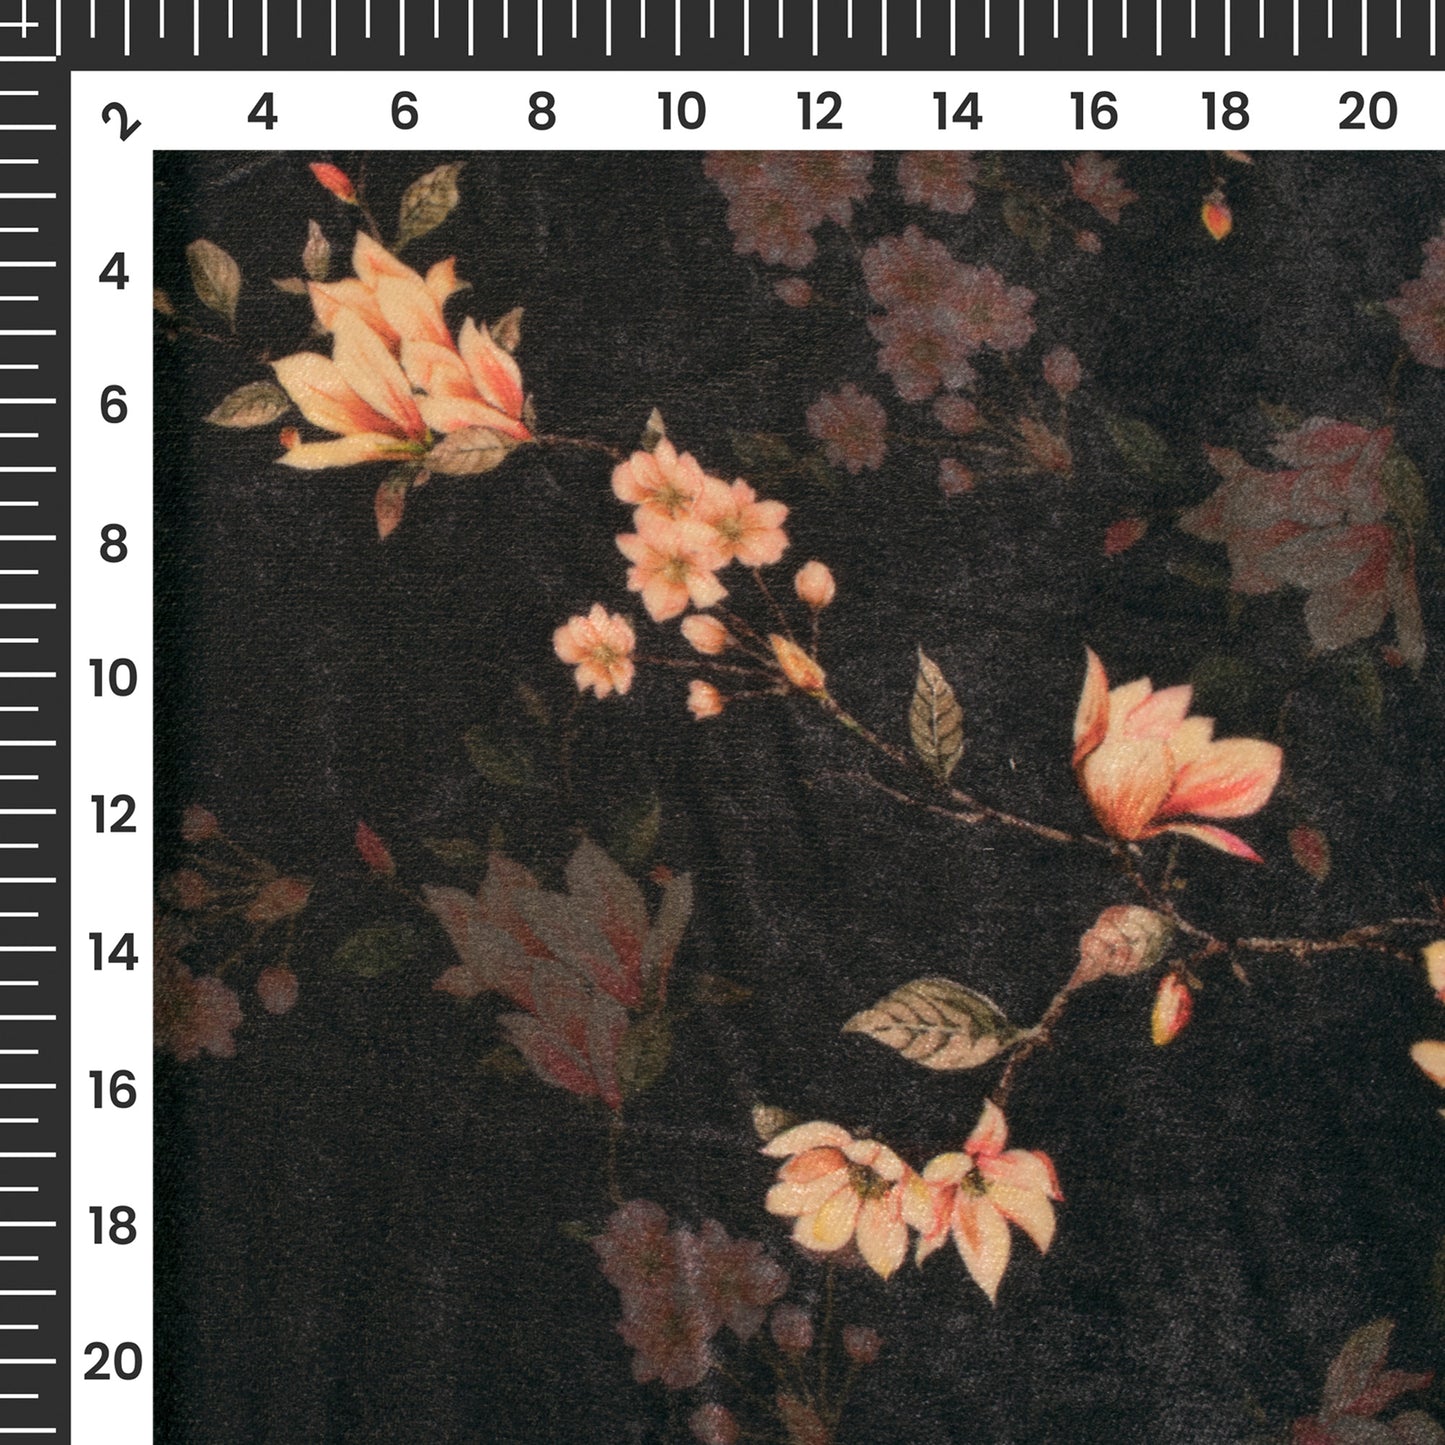 Black Floral Pattern Digital Print Velvet Fabric